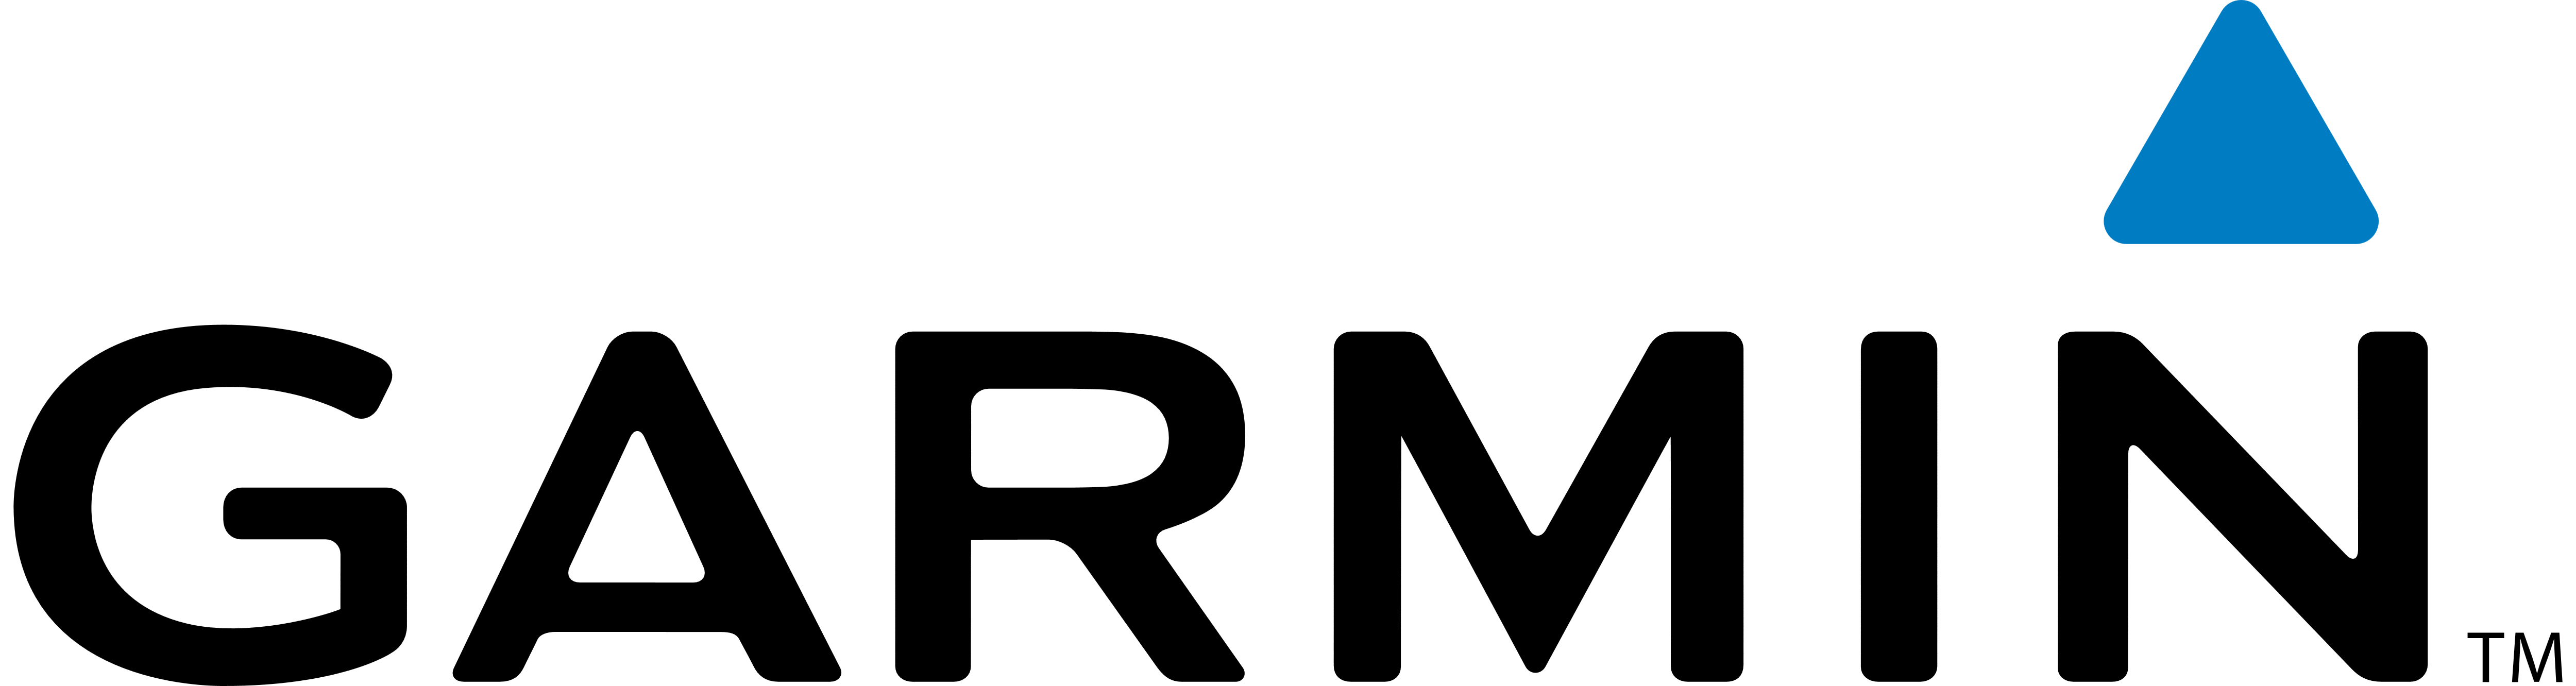 Garmin_logo